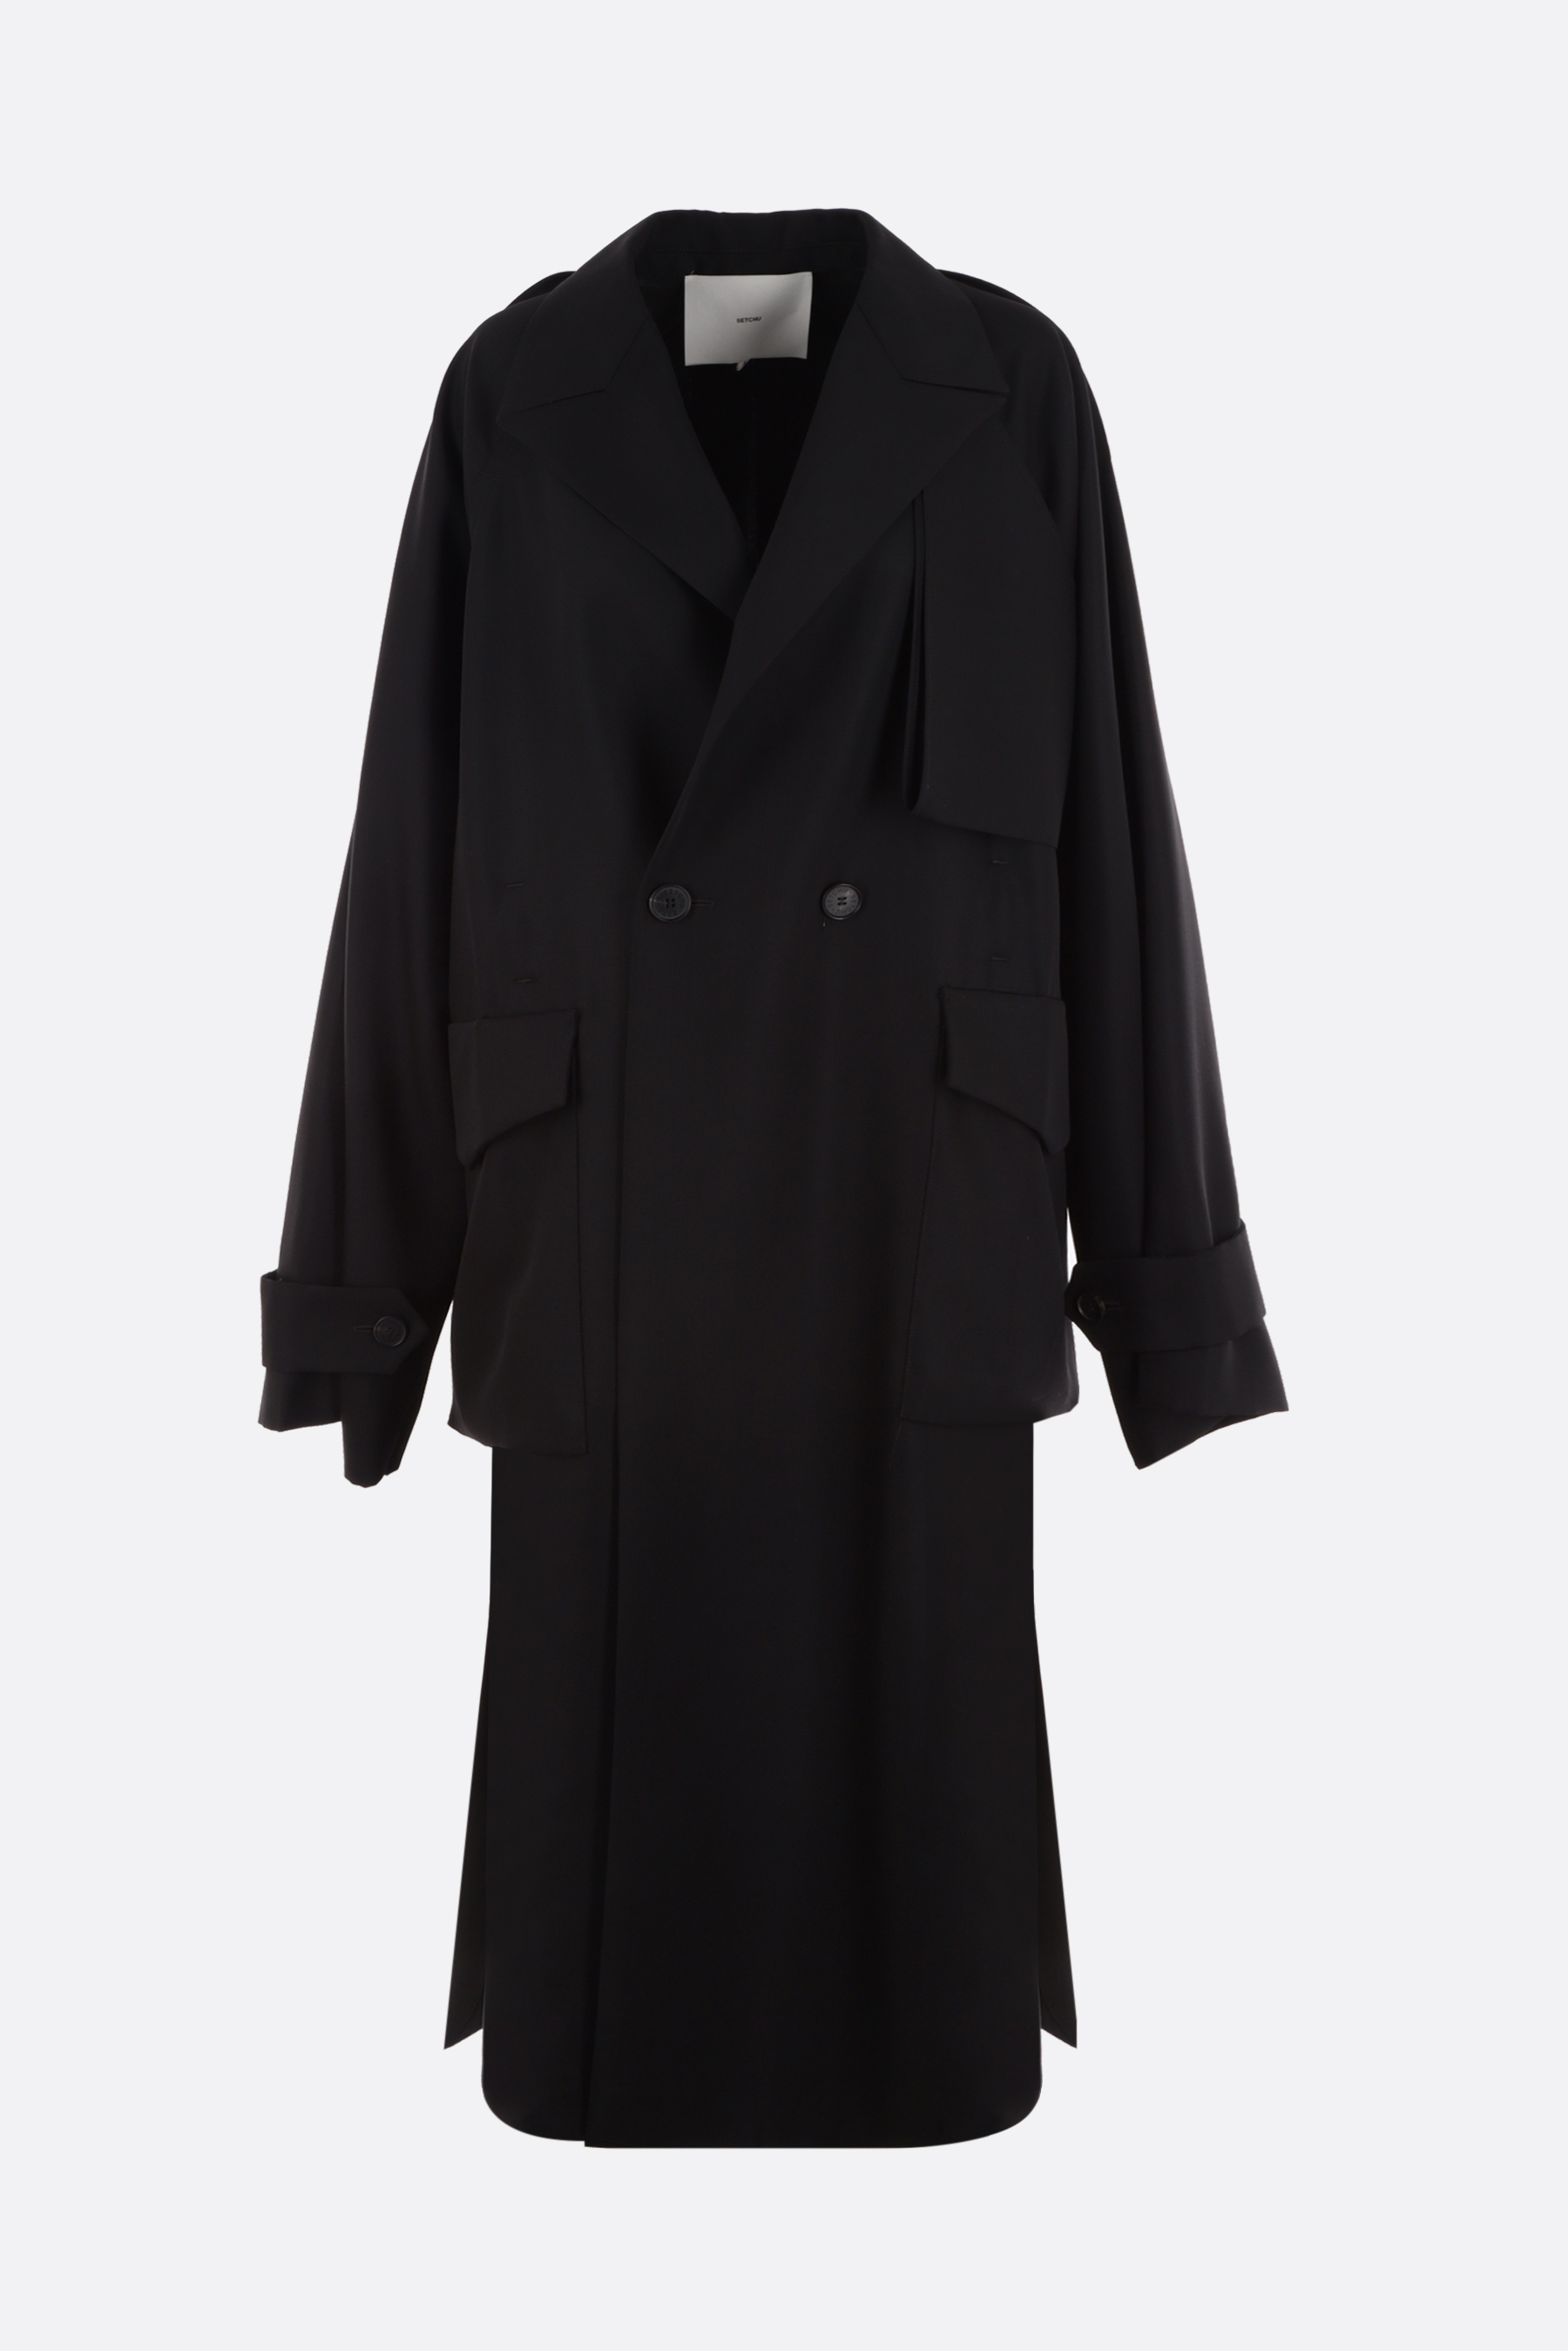 SETCHU Origami wool and mohair trench coat - Black - U231C005W009BLACK ...